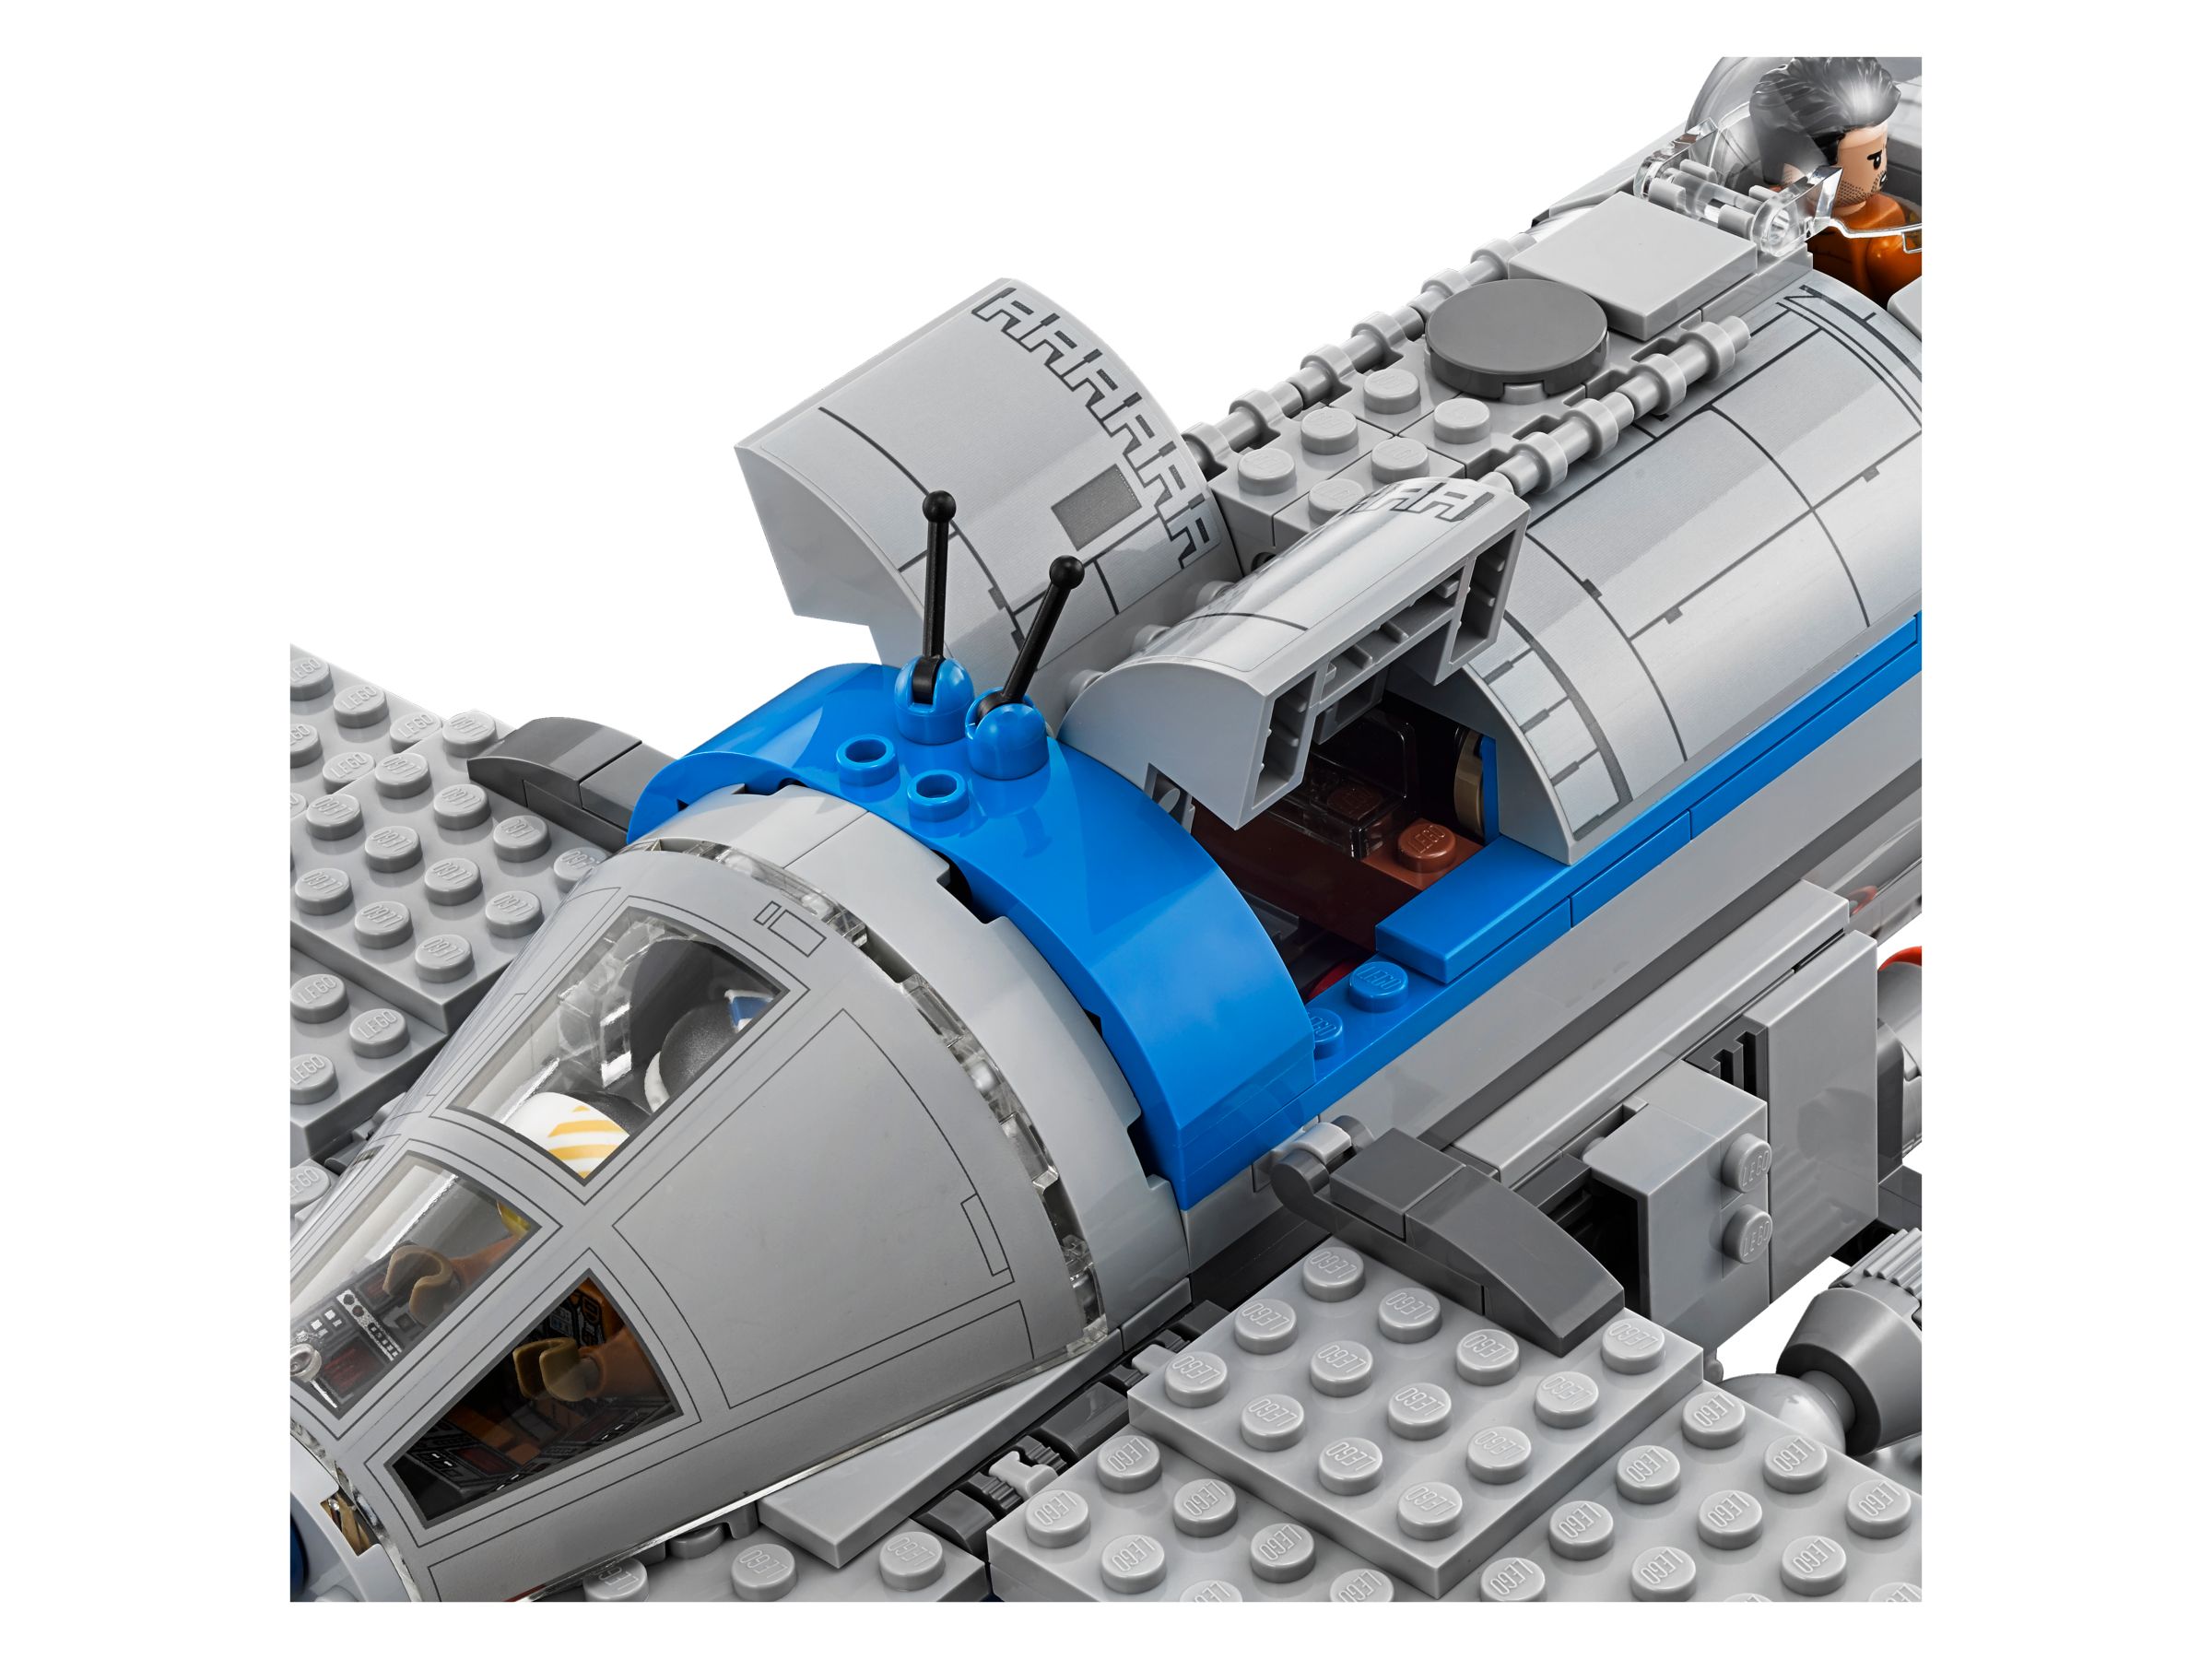 LEGO Star Wars 75188 Resistance Bomber LEGO_75188_alt4.jpg